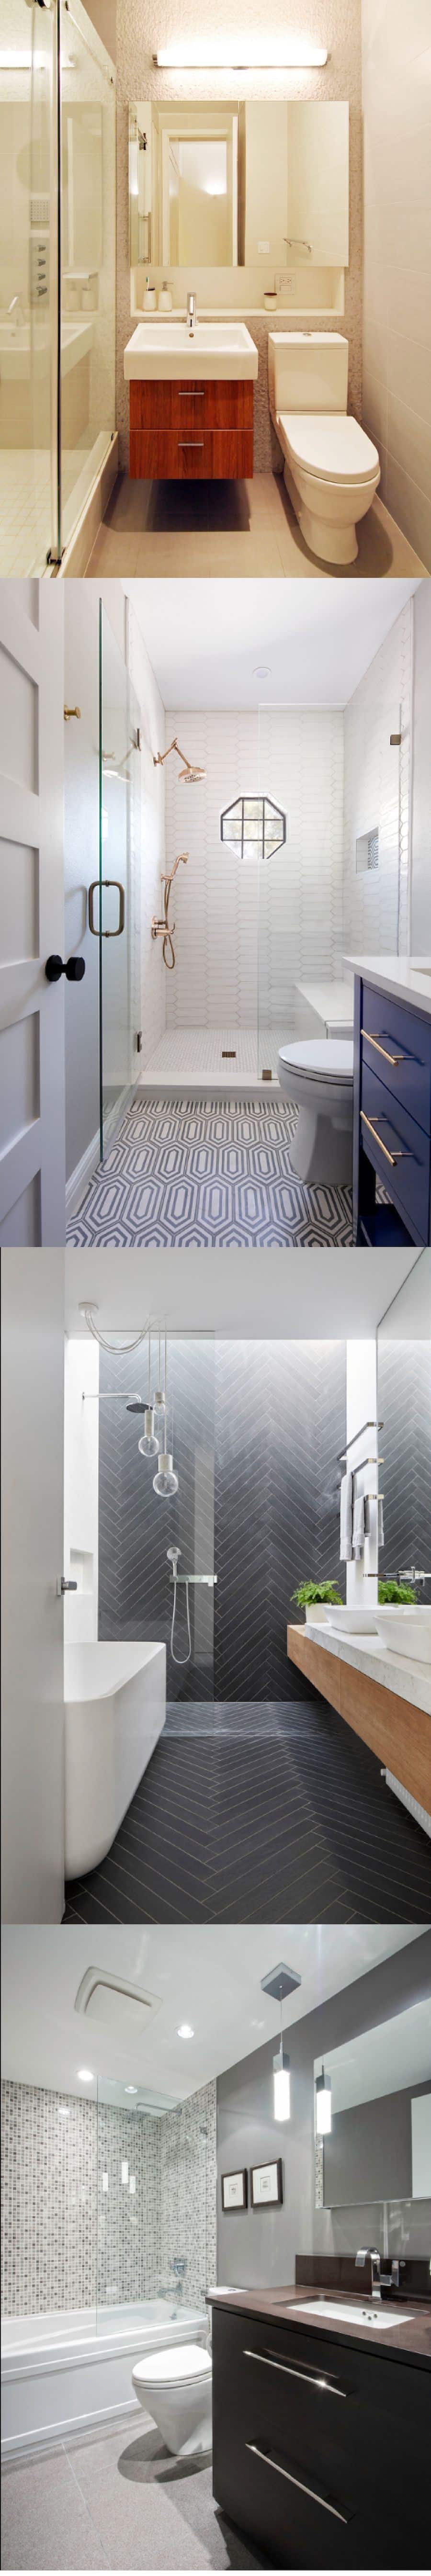 small master bathroom designs